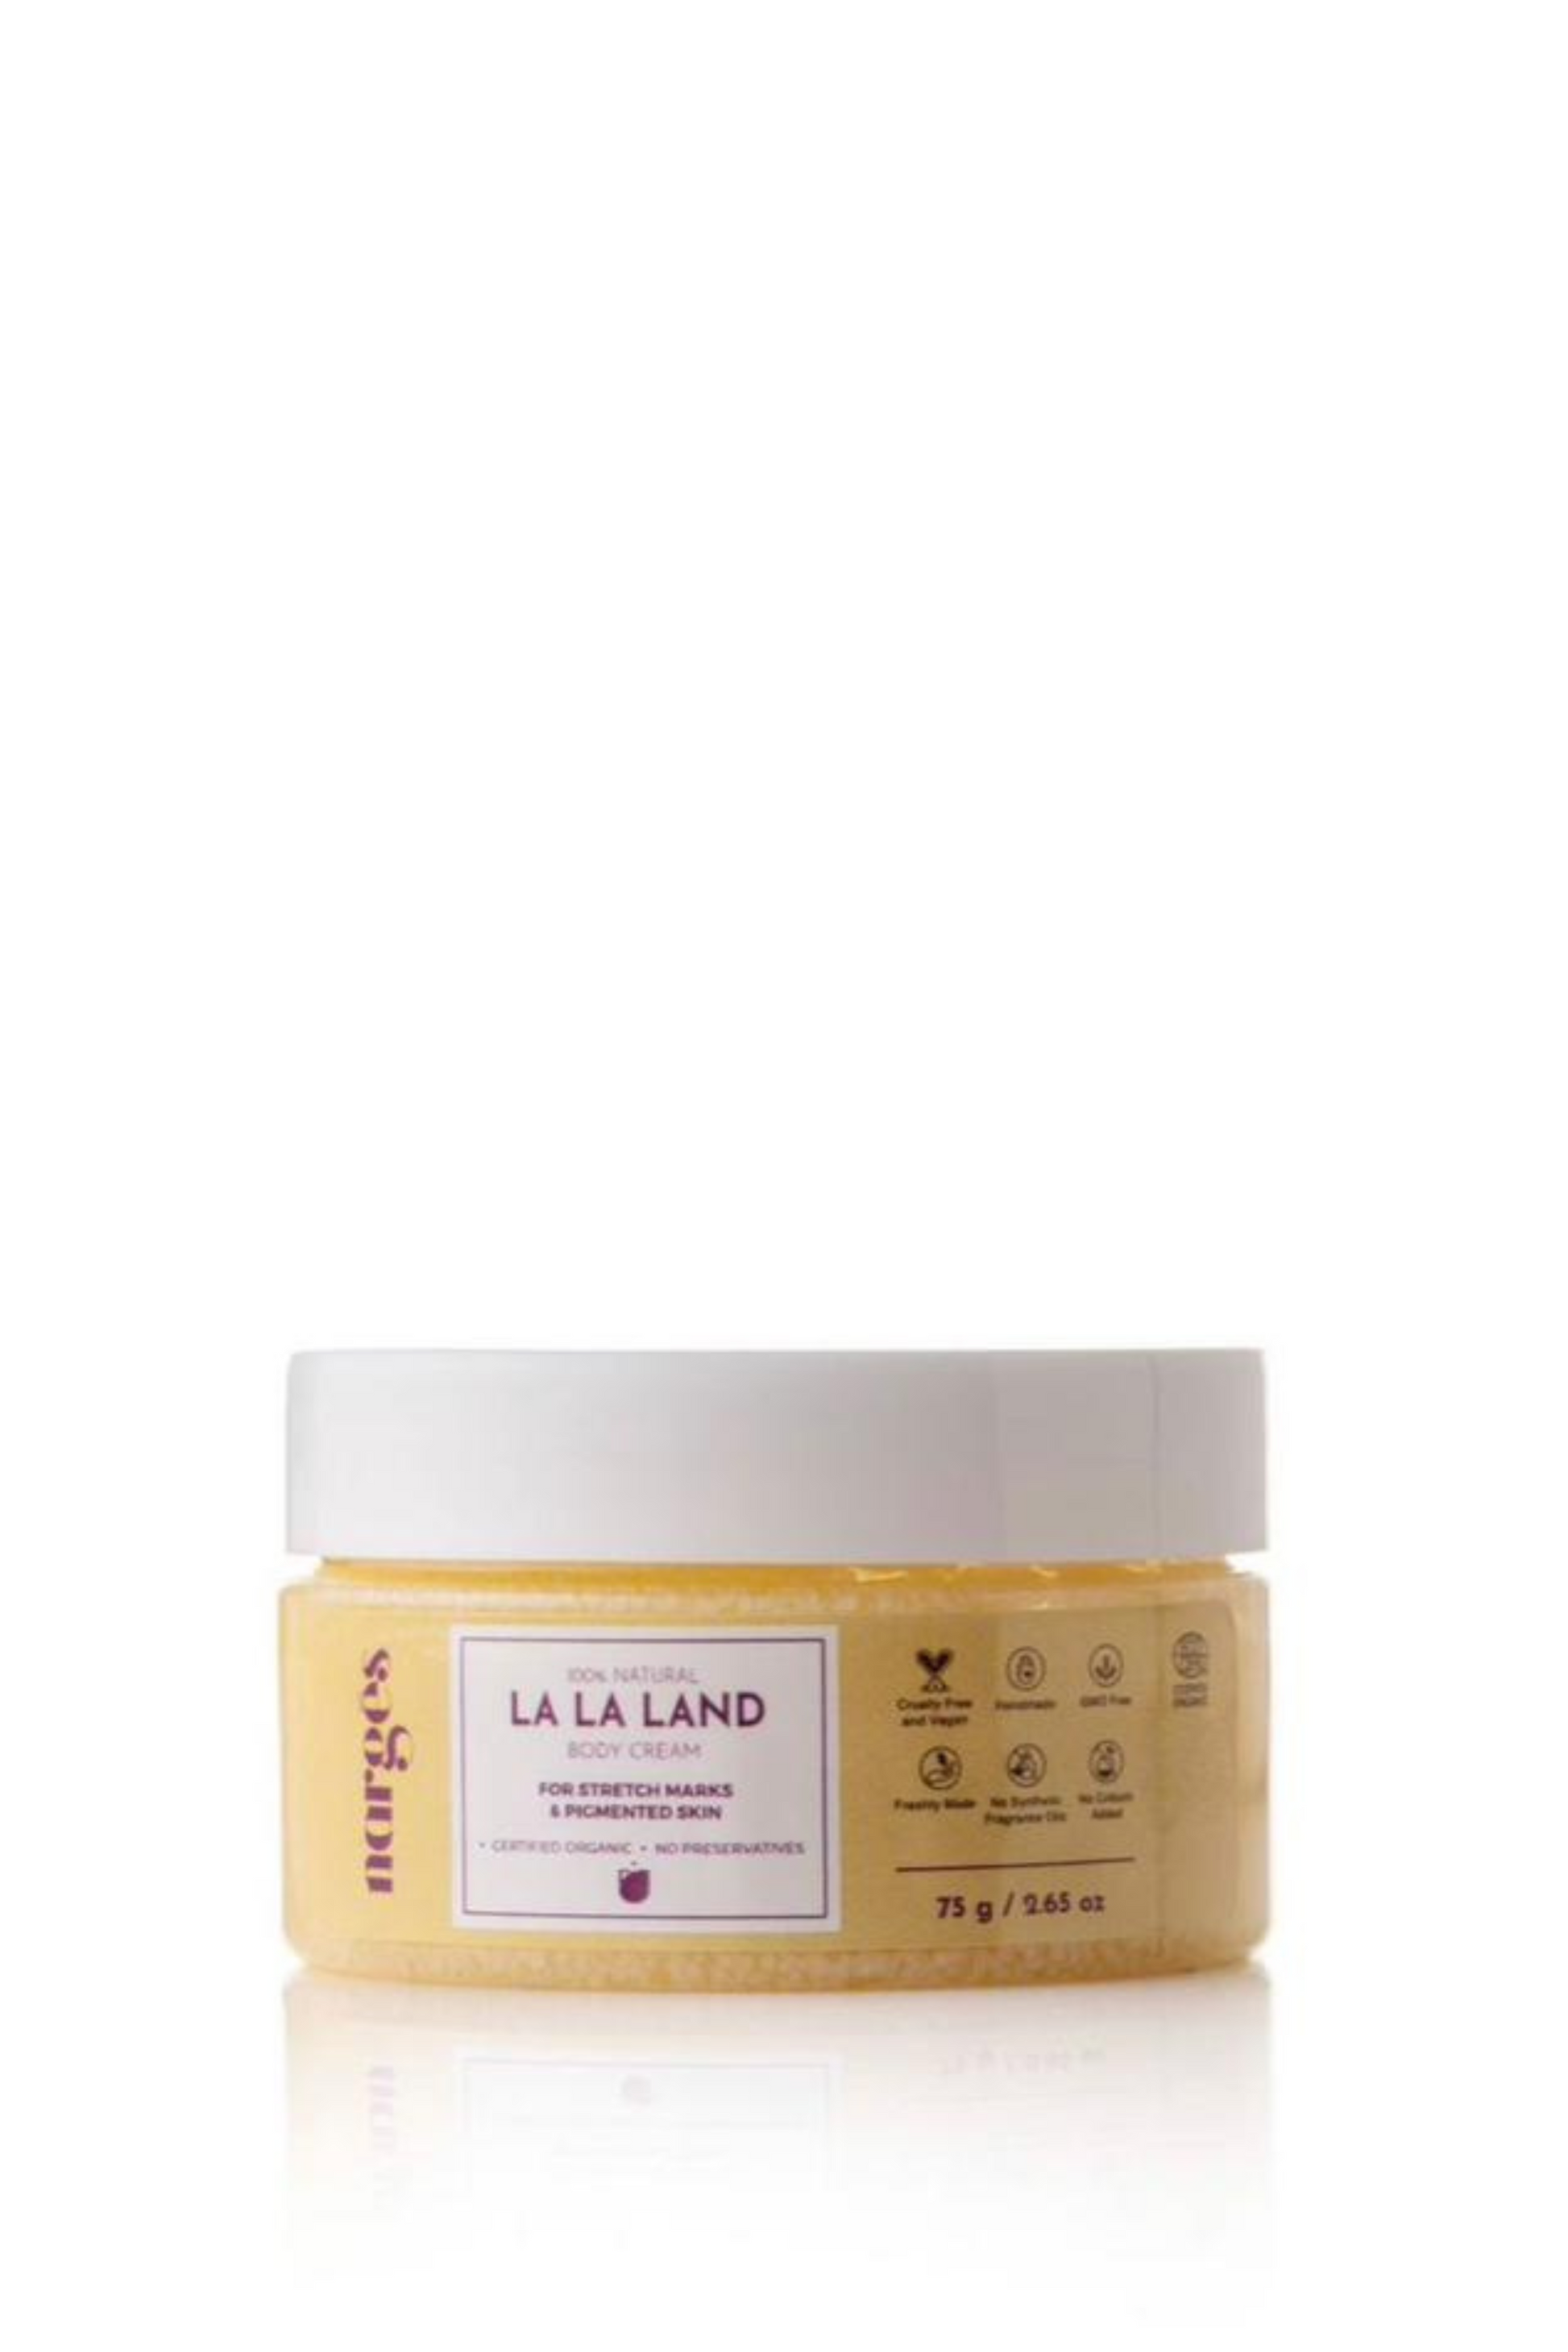 La La Land- Body whitening cream